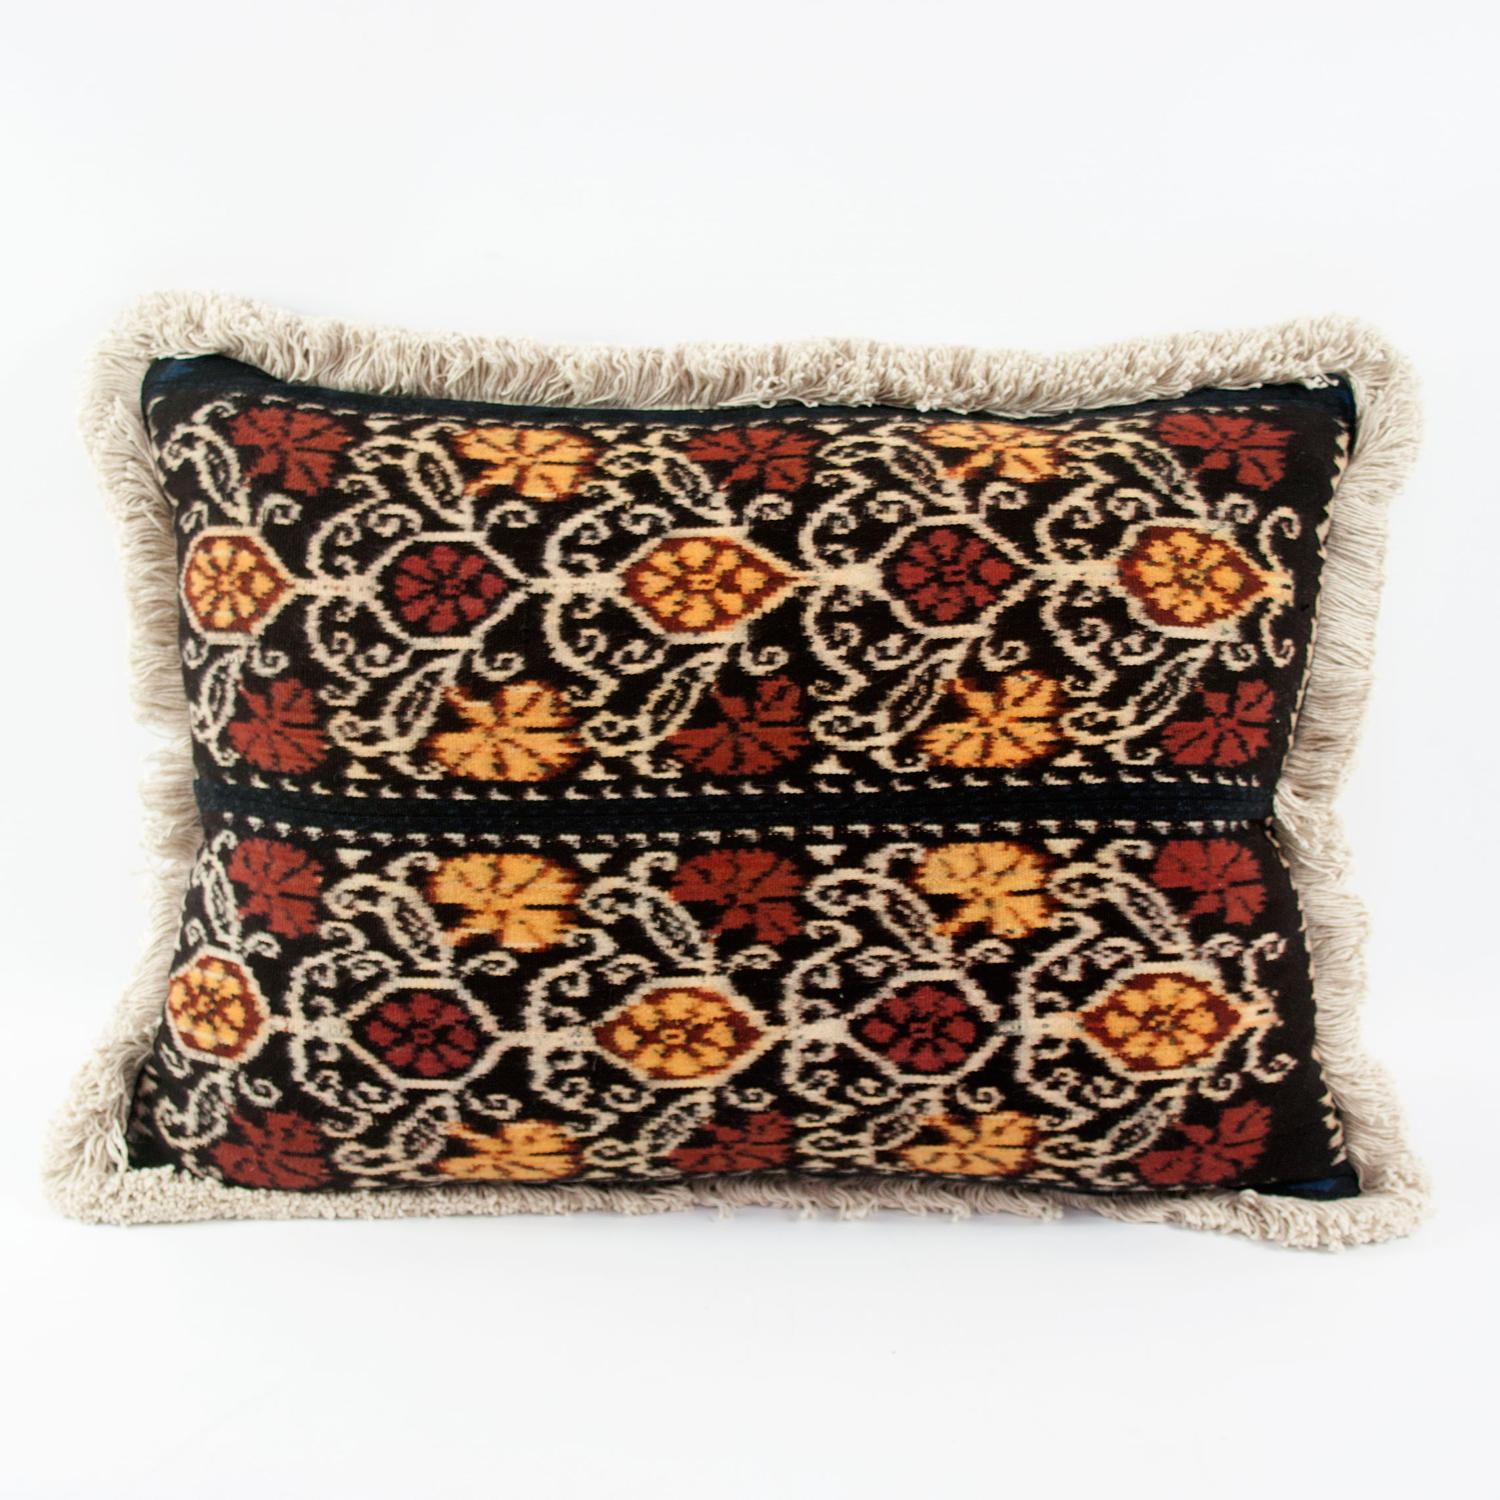 Ikat Cushions with Fringe Trim